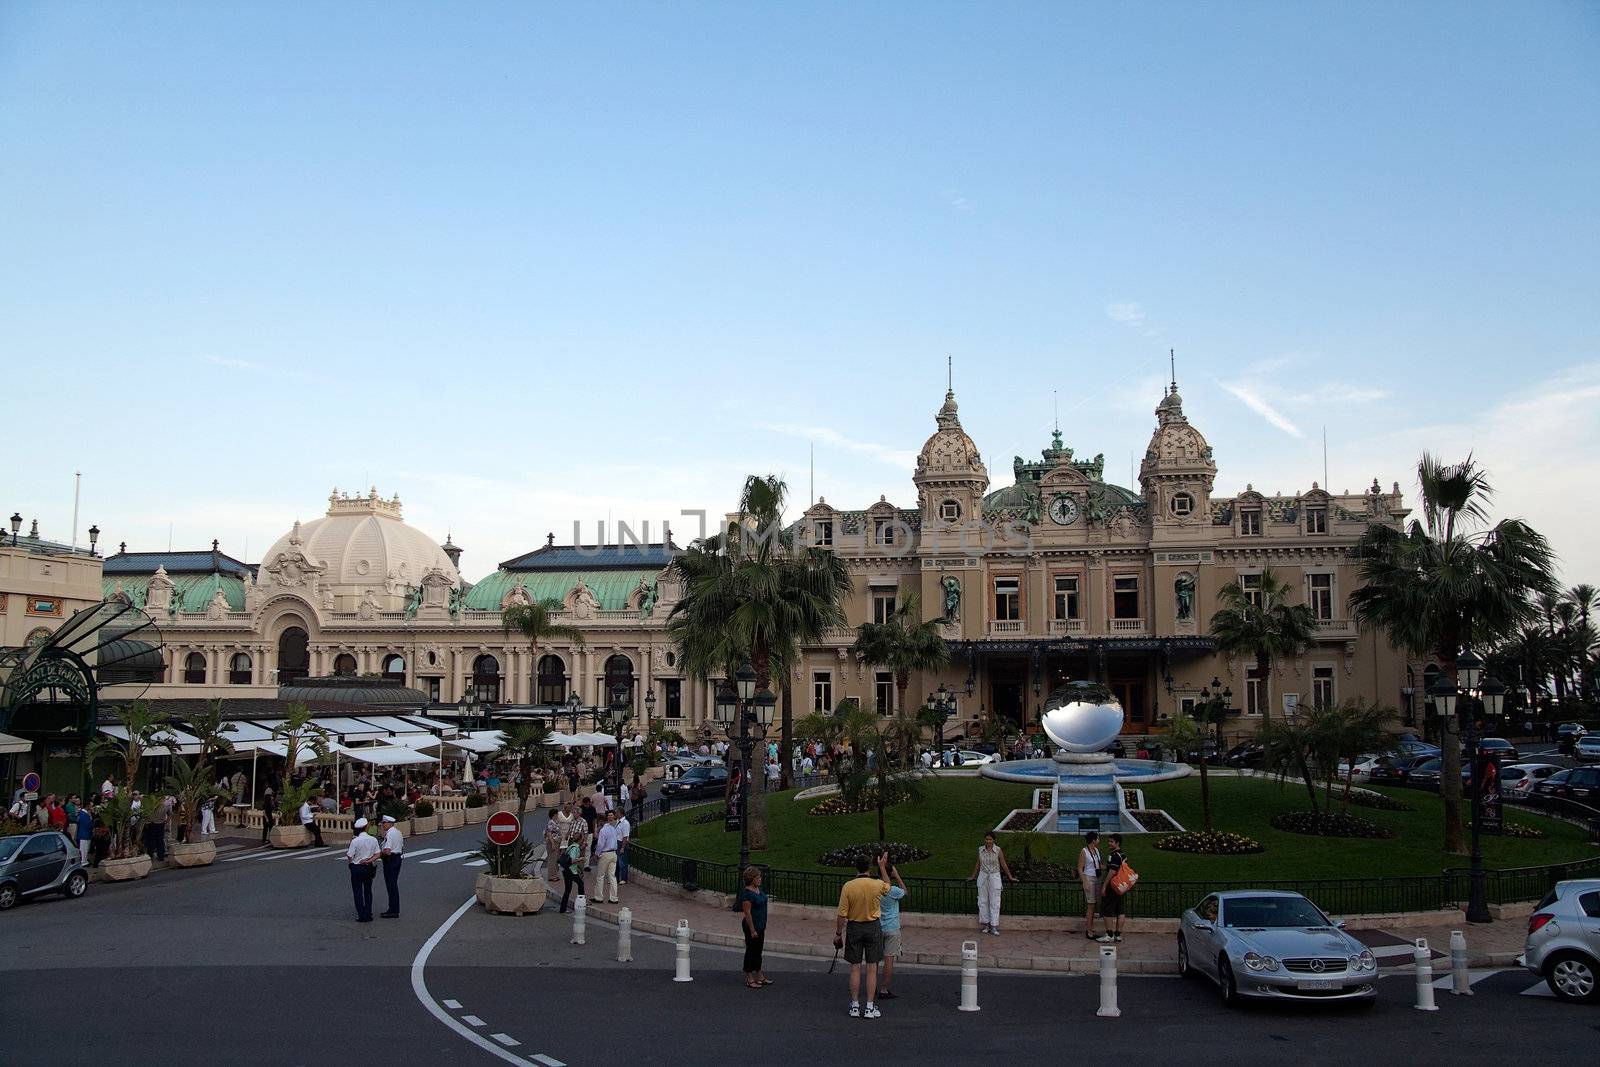 Monte Carlo Casino by Moonb007